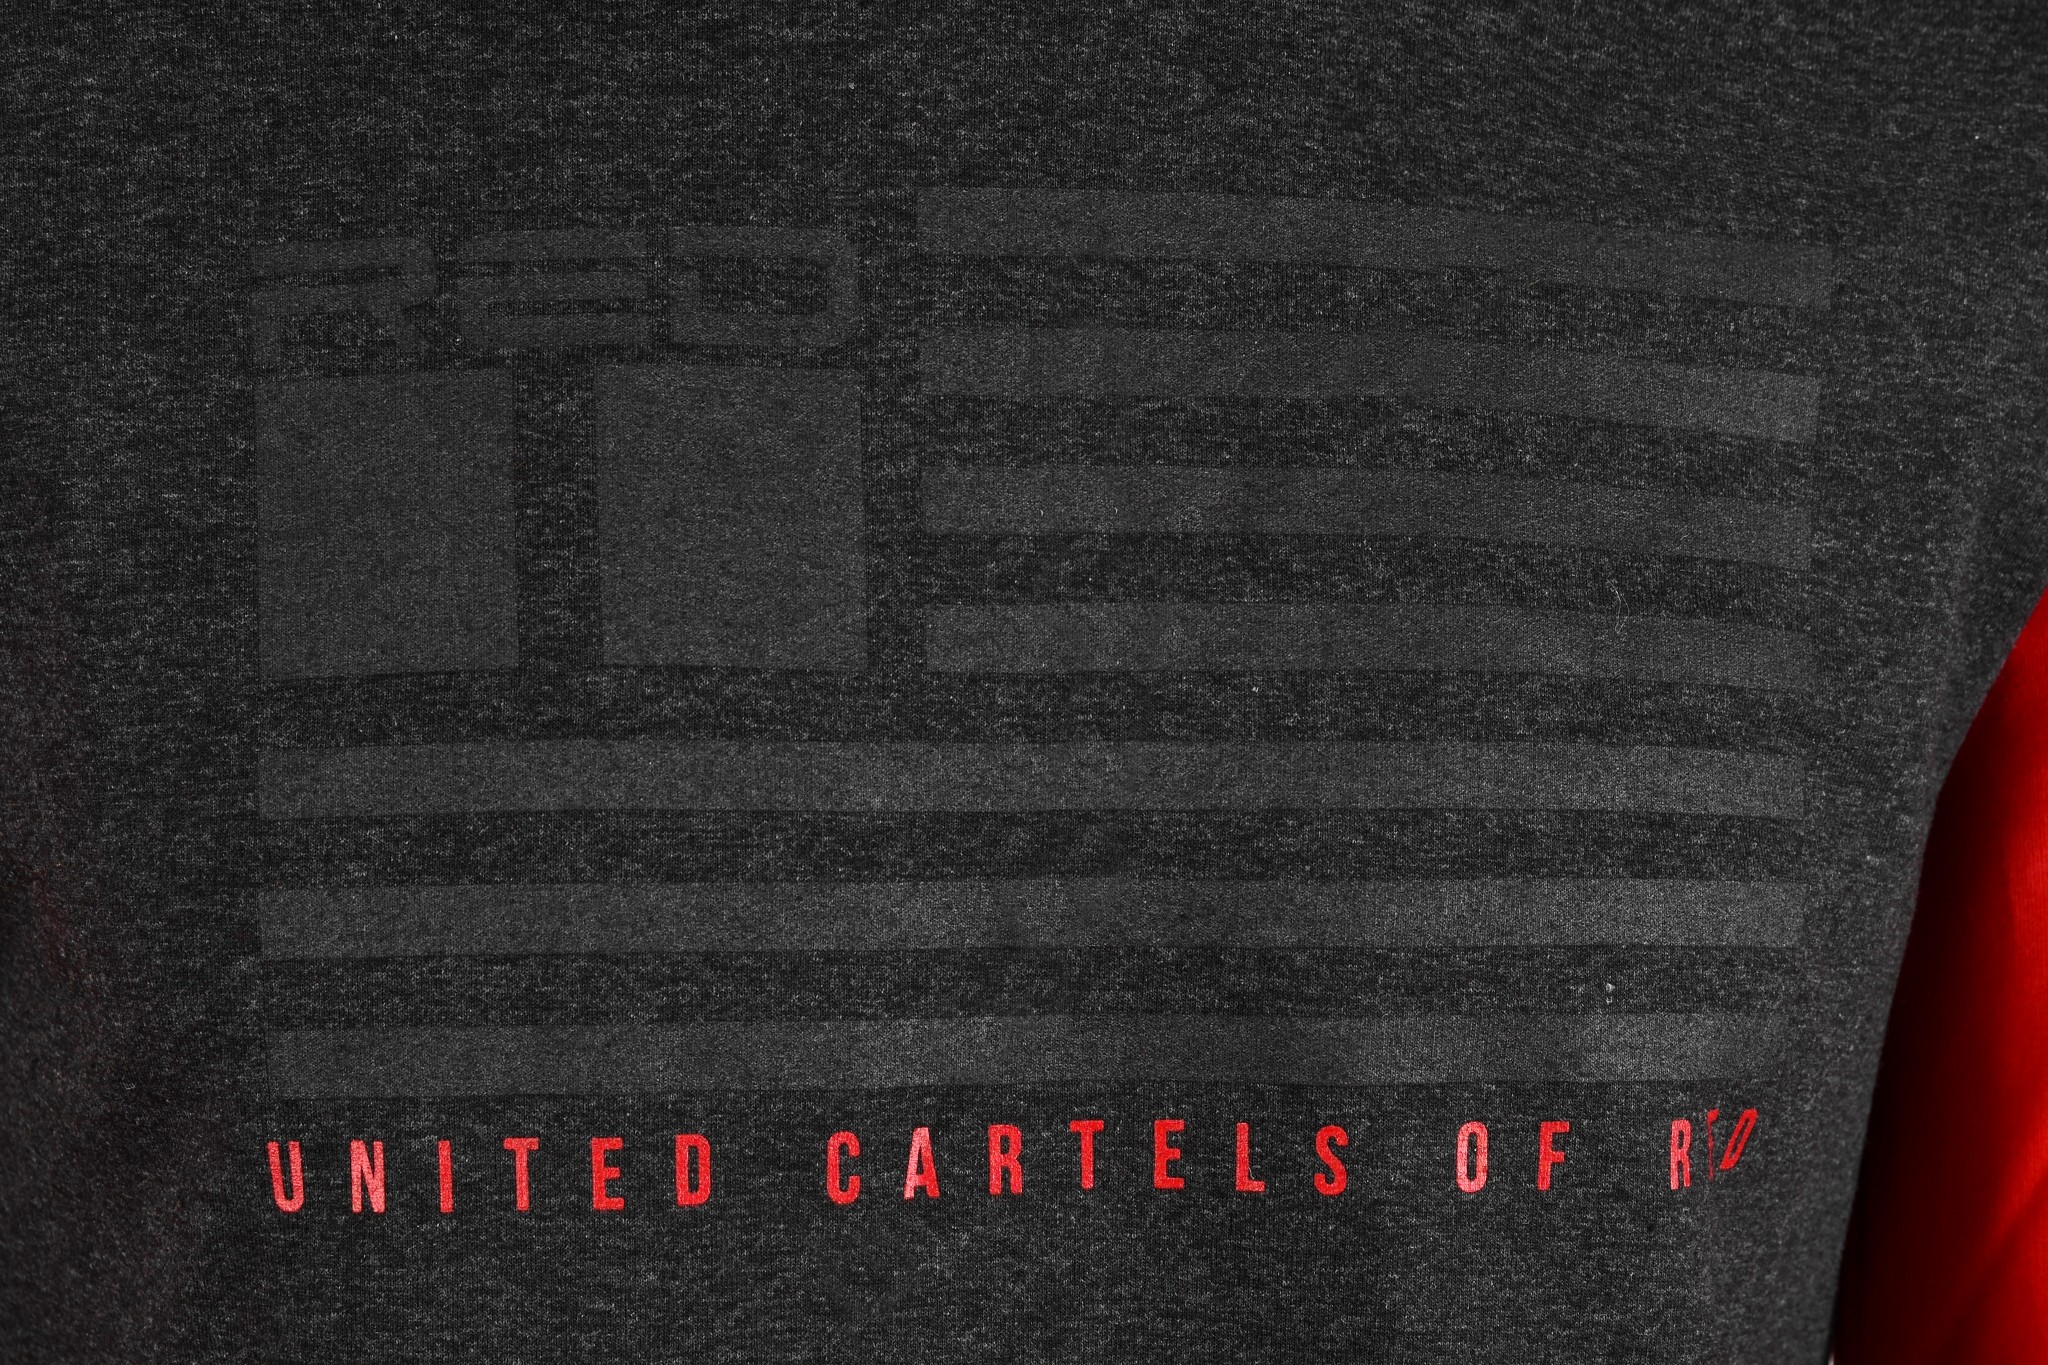 United Cartels Of Red UCR Grey/Red Sweatshirt